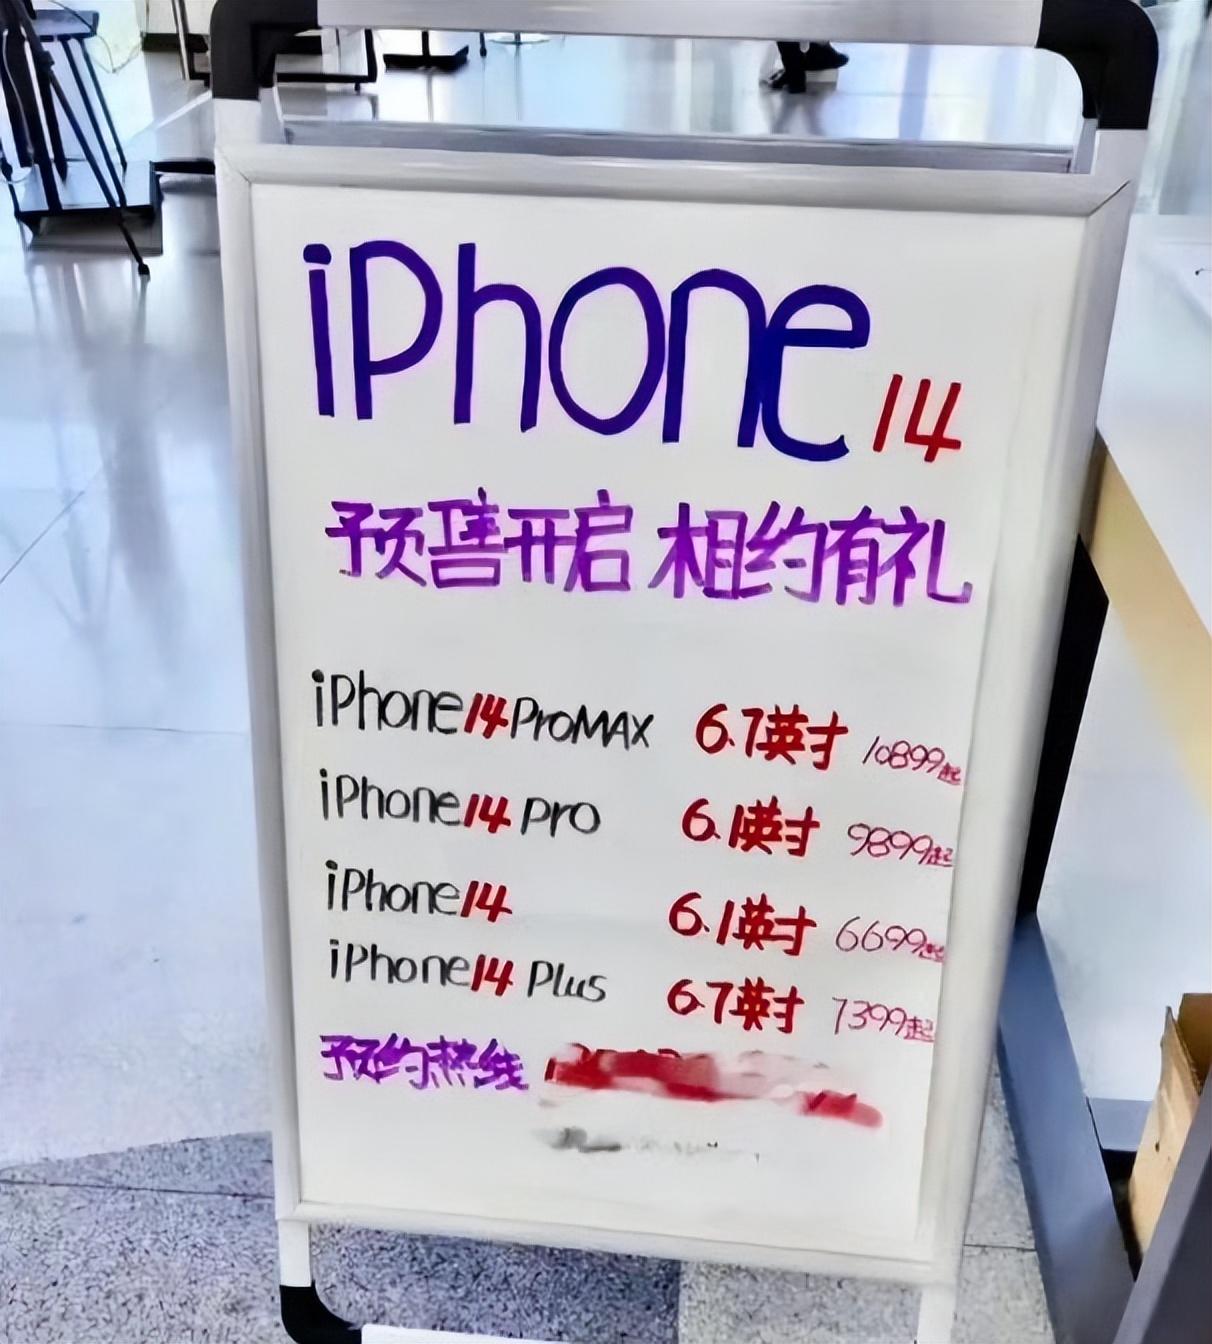 iPhone14预售价